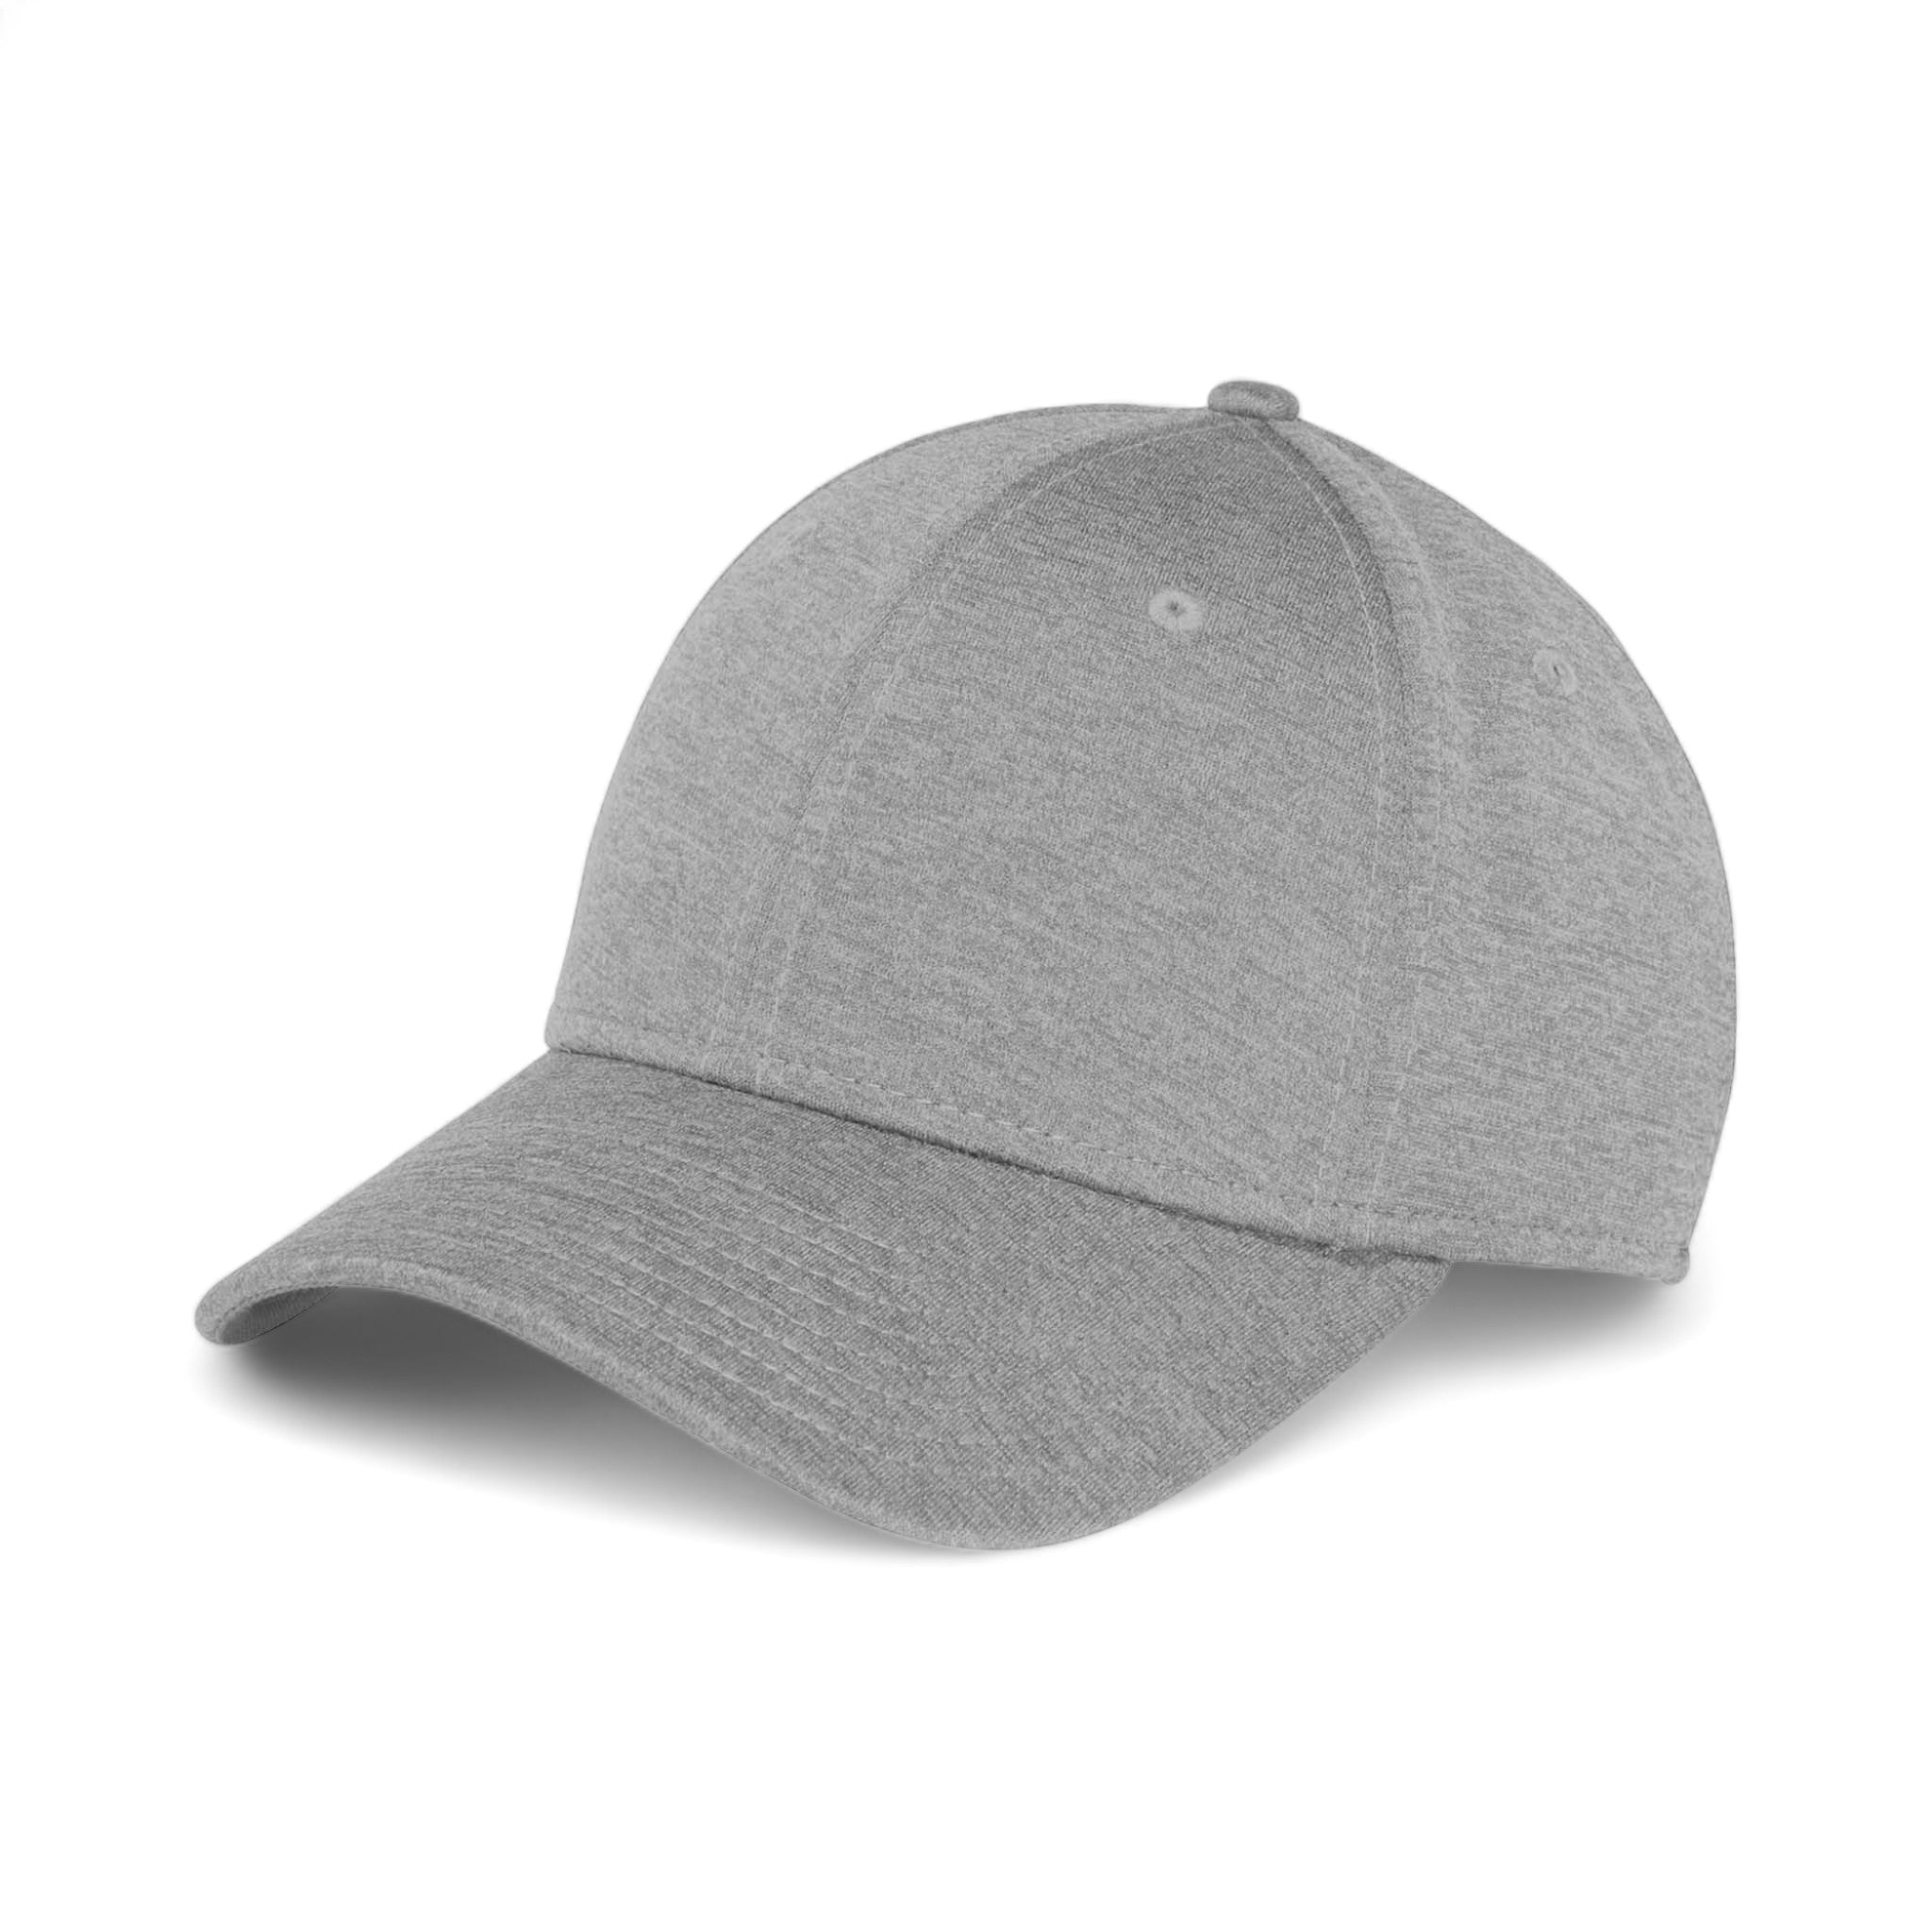 Side view of New Era NE703 custom hat in grey shadow heather